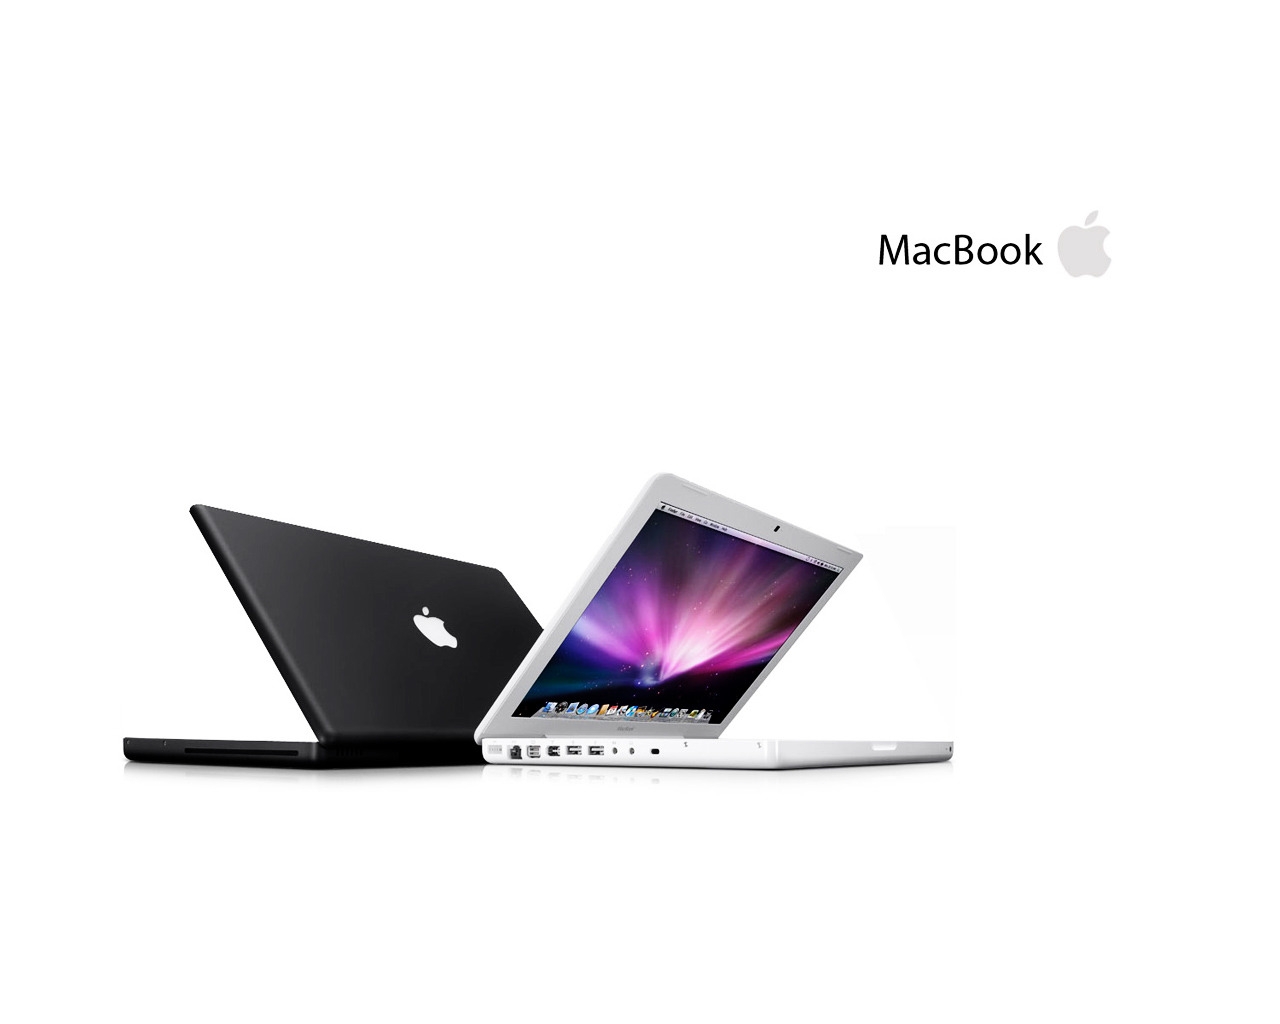 Apple MacBook for 1280 x 1024 resolution